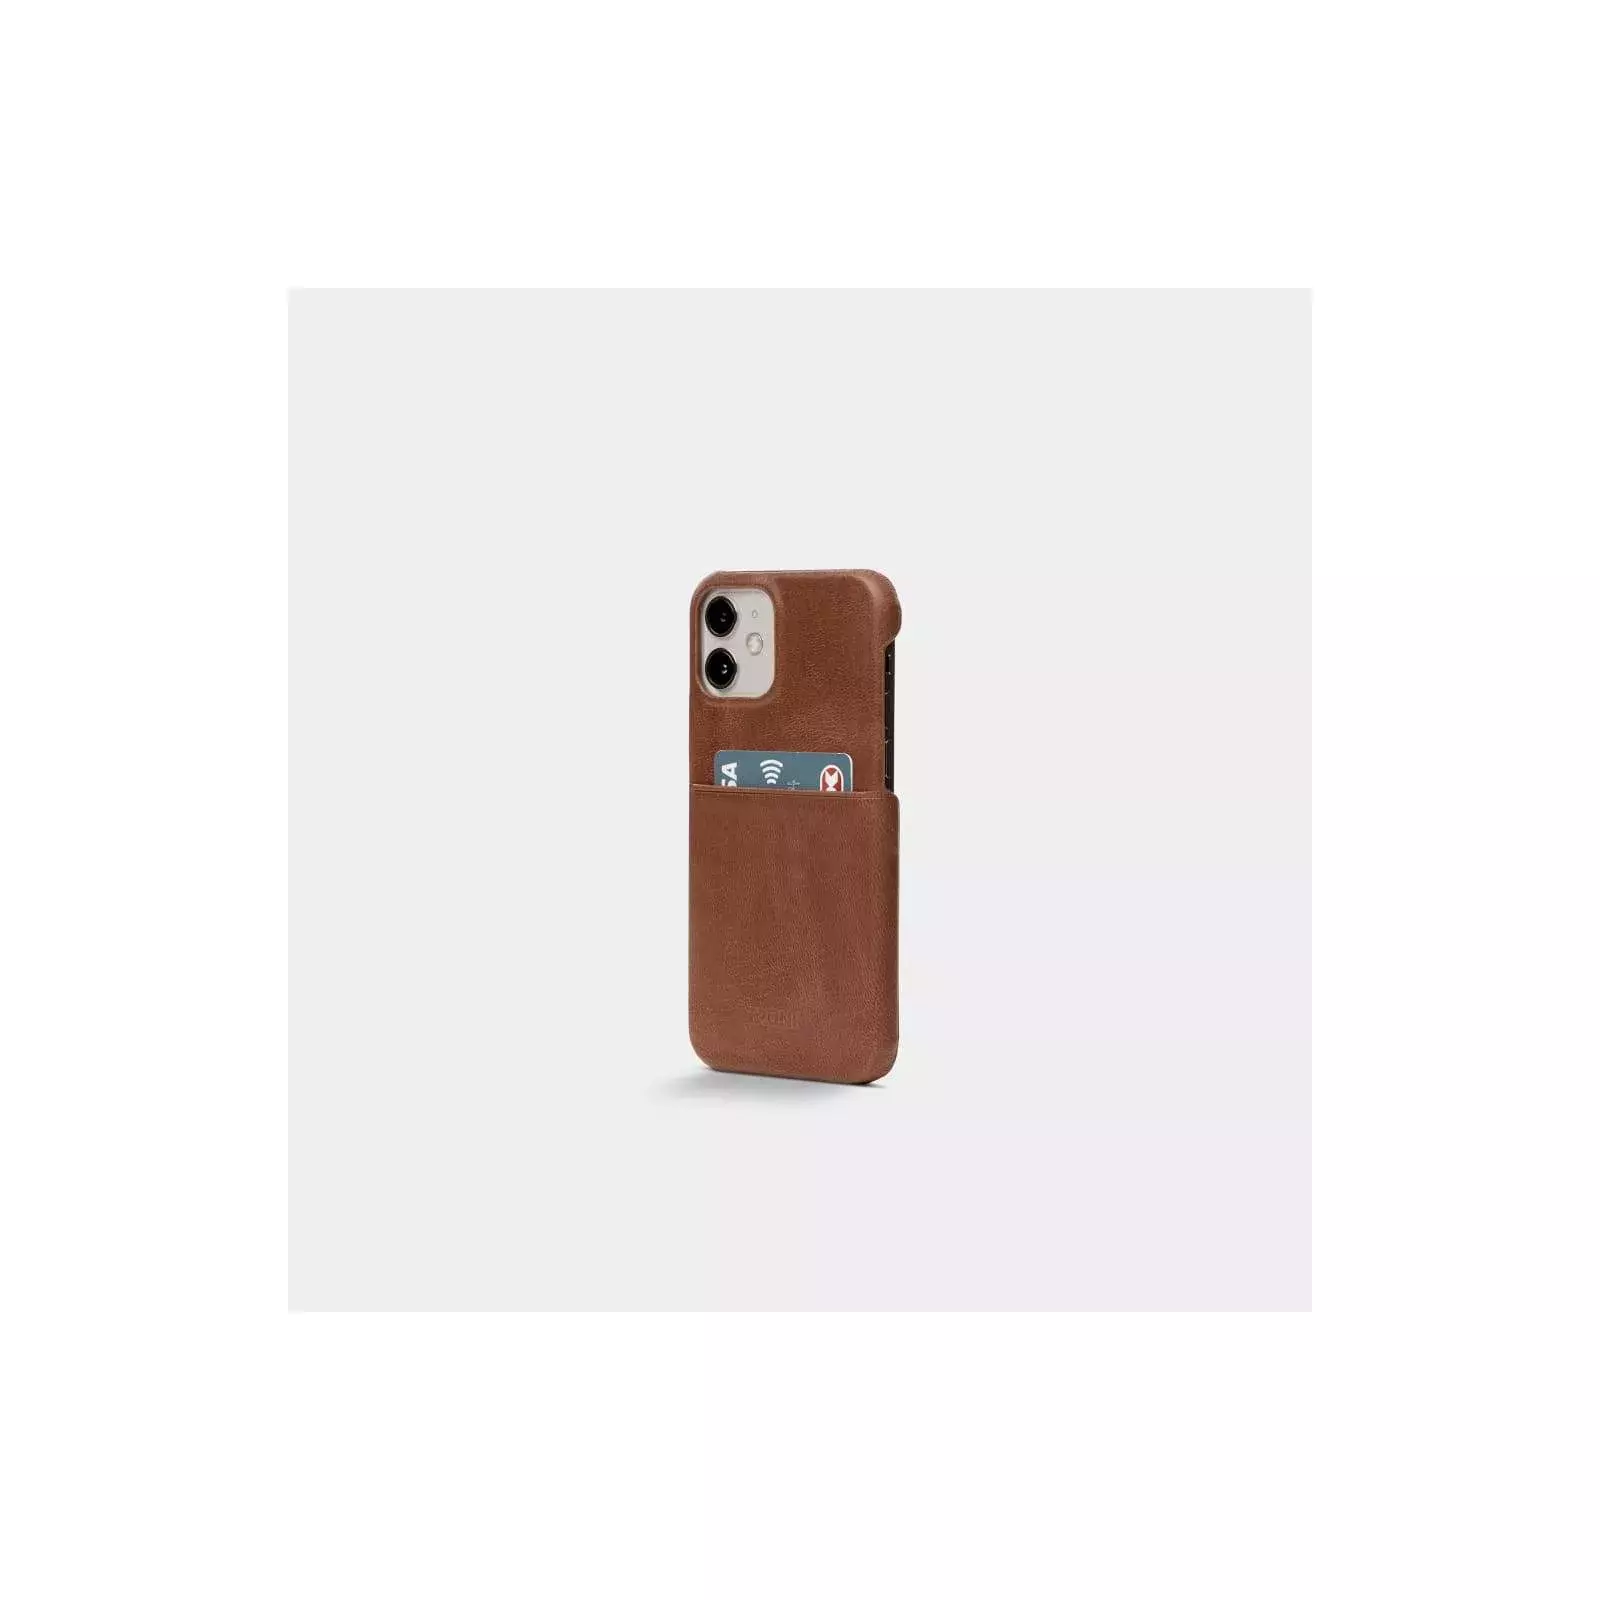 Lv Trunk Phone Case Iphone 11 Pro Maxim